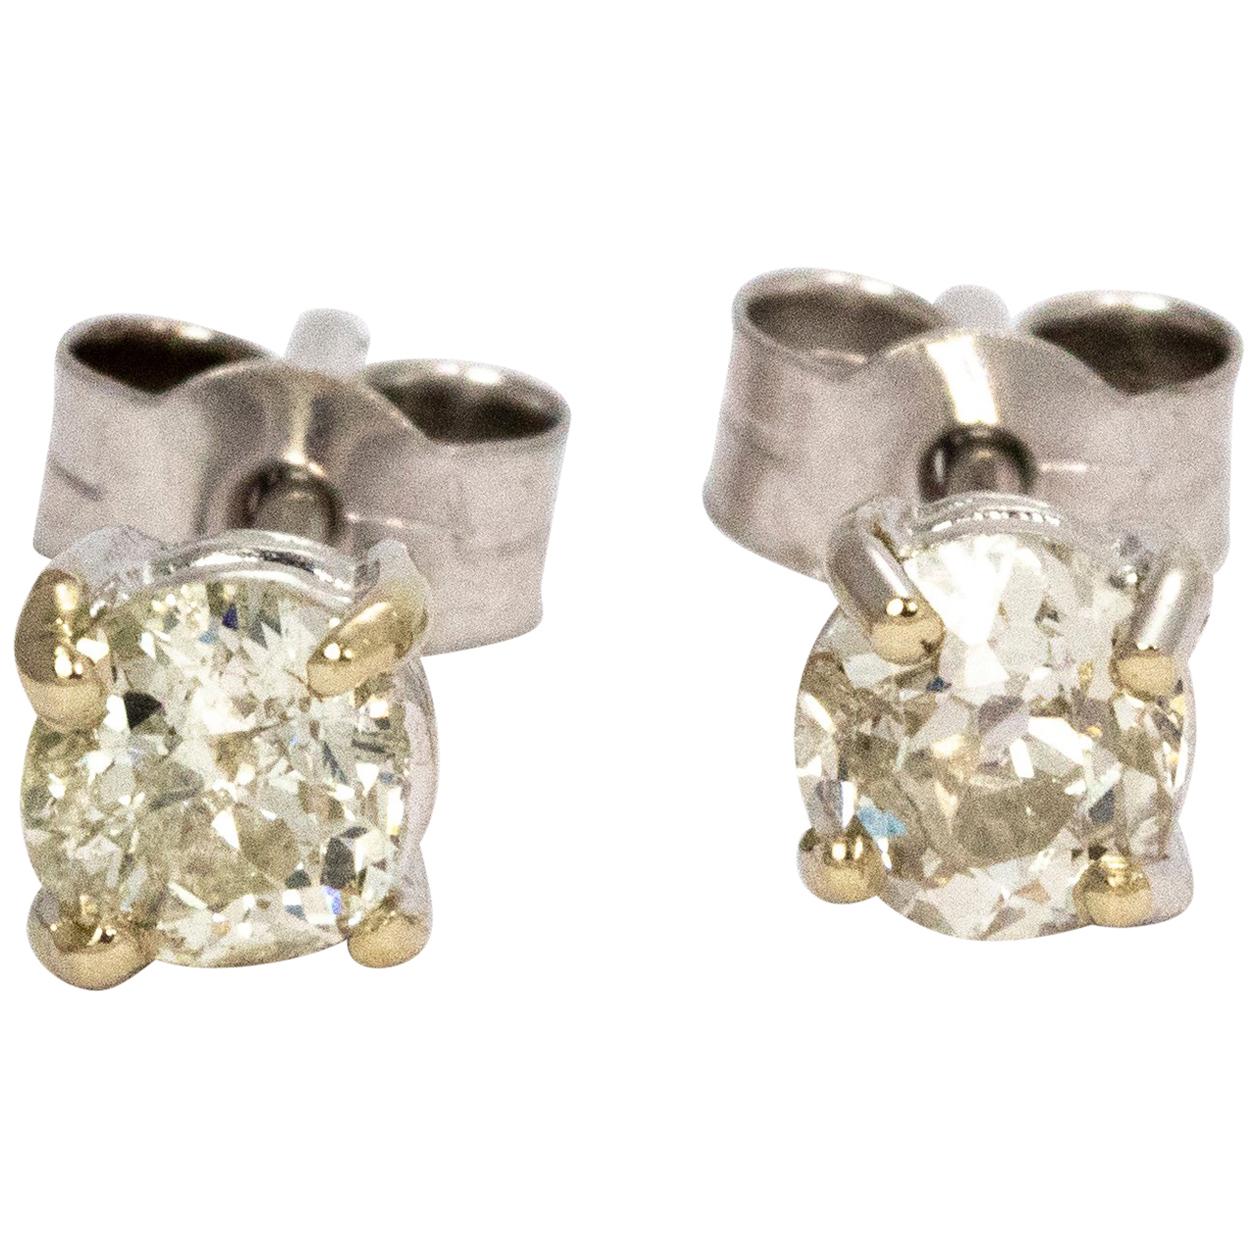 Diamond Stud Earrings 0.70 Total Carat Weight Set in 18 Carat White Gold